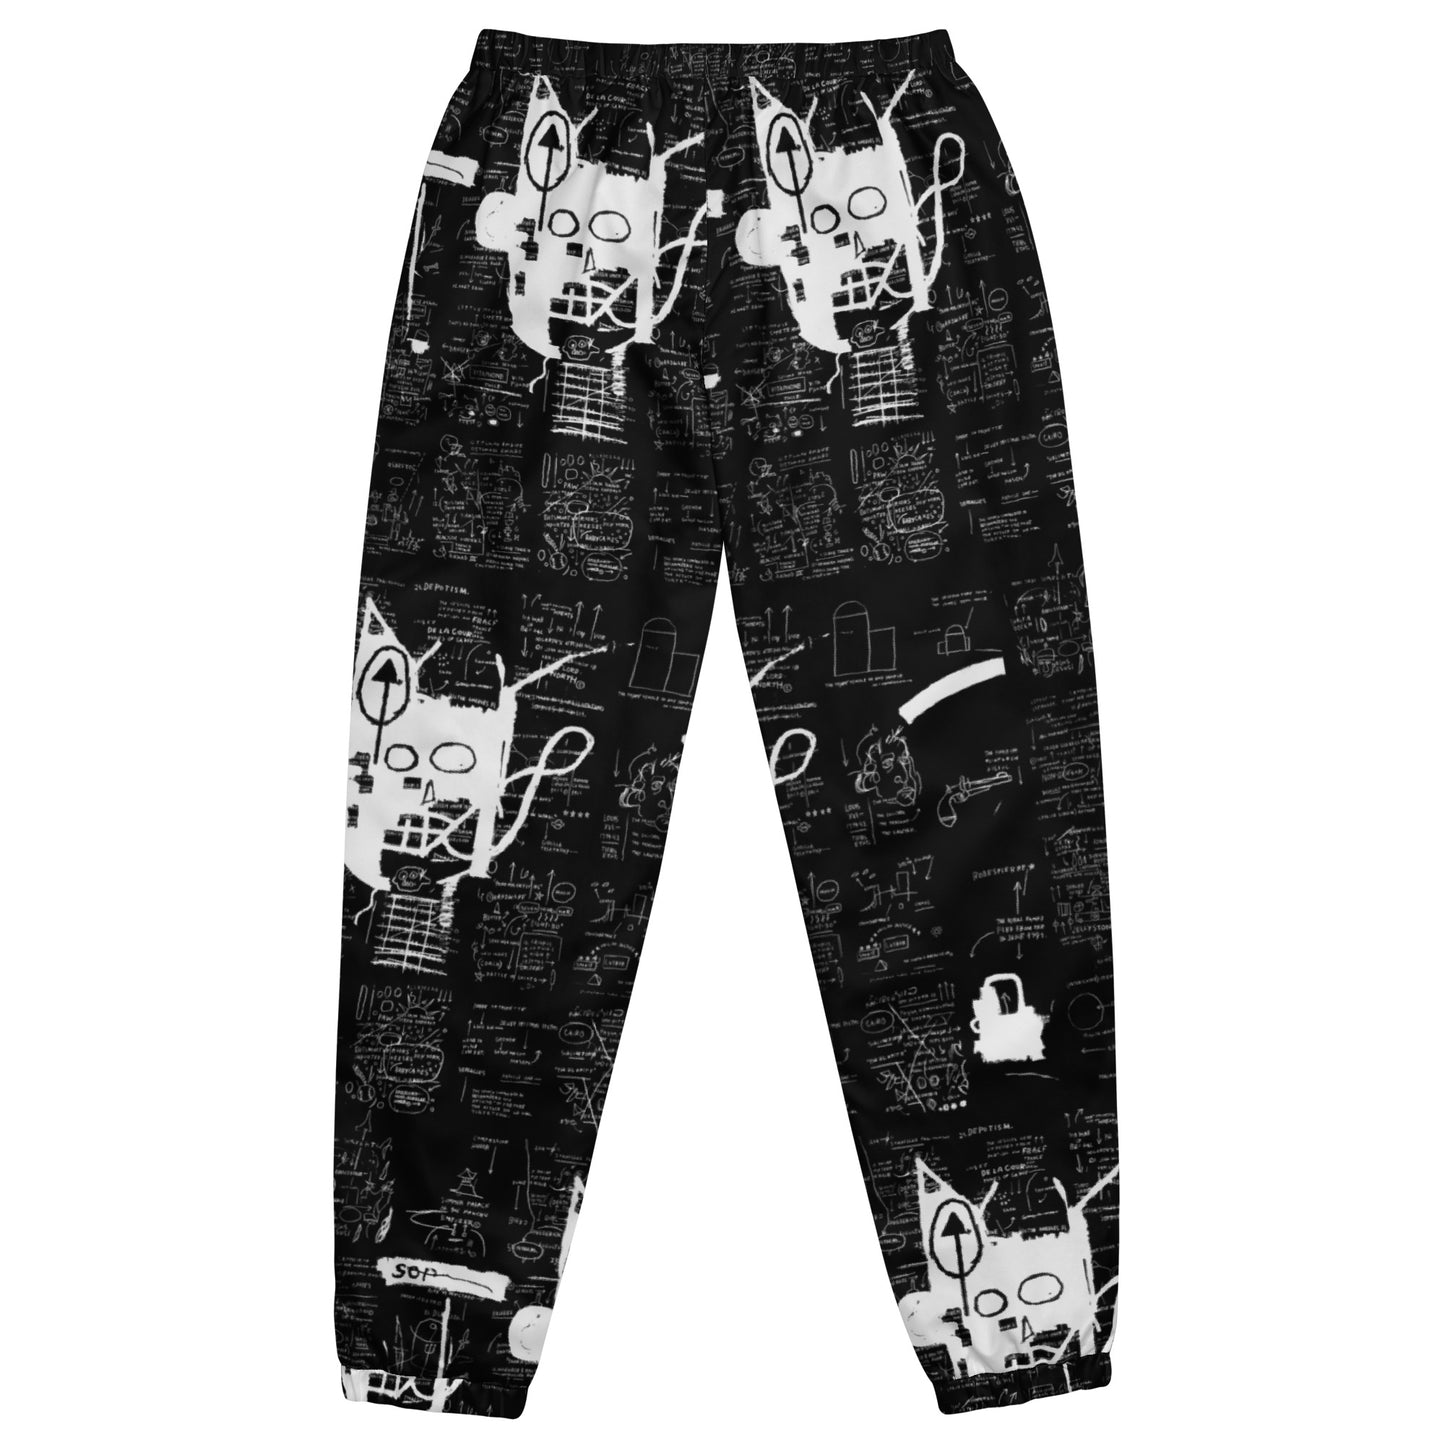 Jean-Michel Basquiat "Untitled" Artwork Printed Premium Track Pants